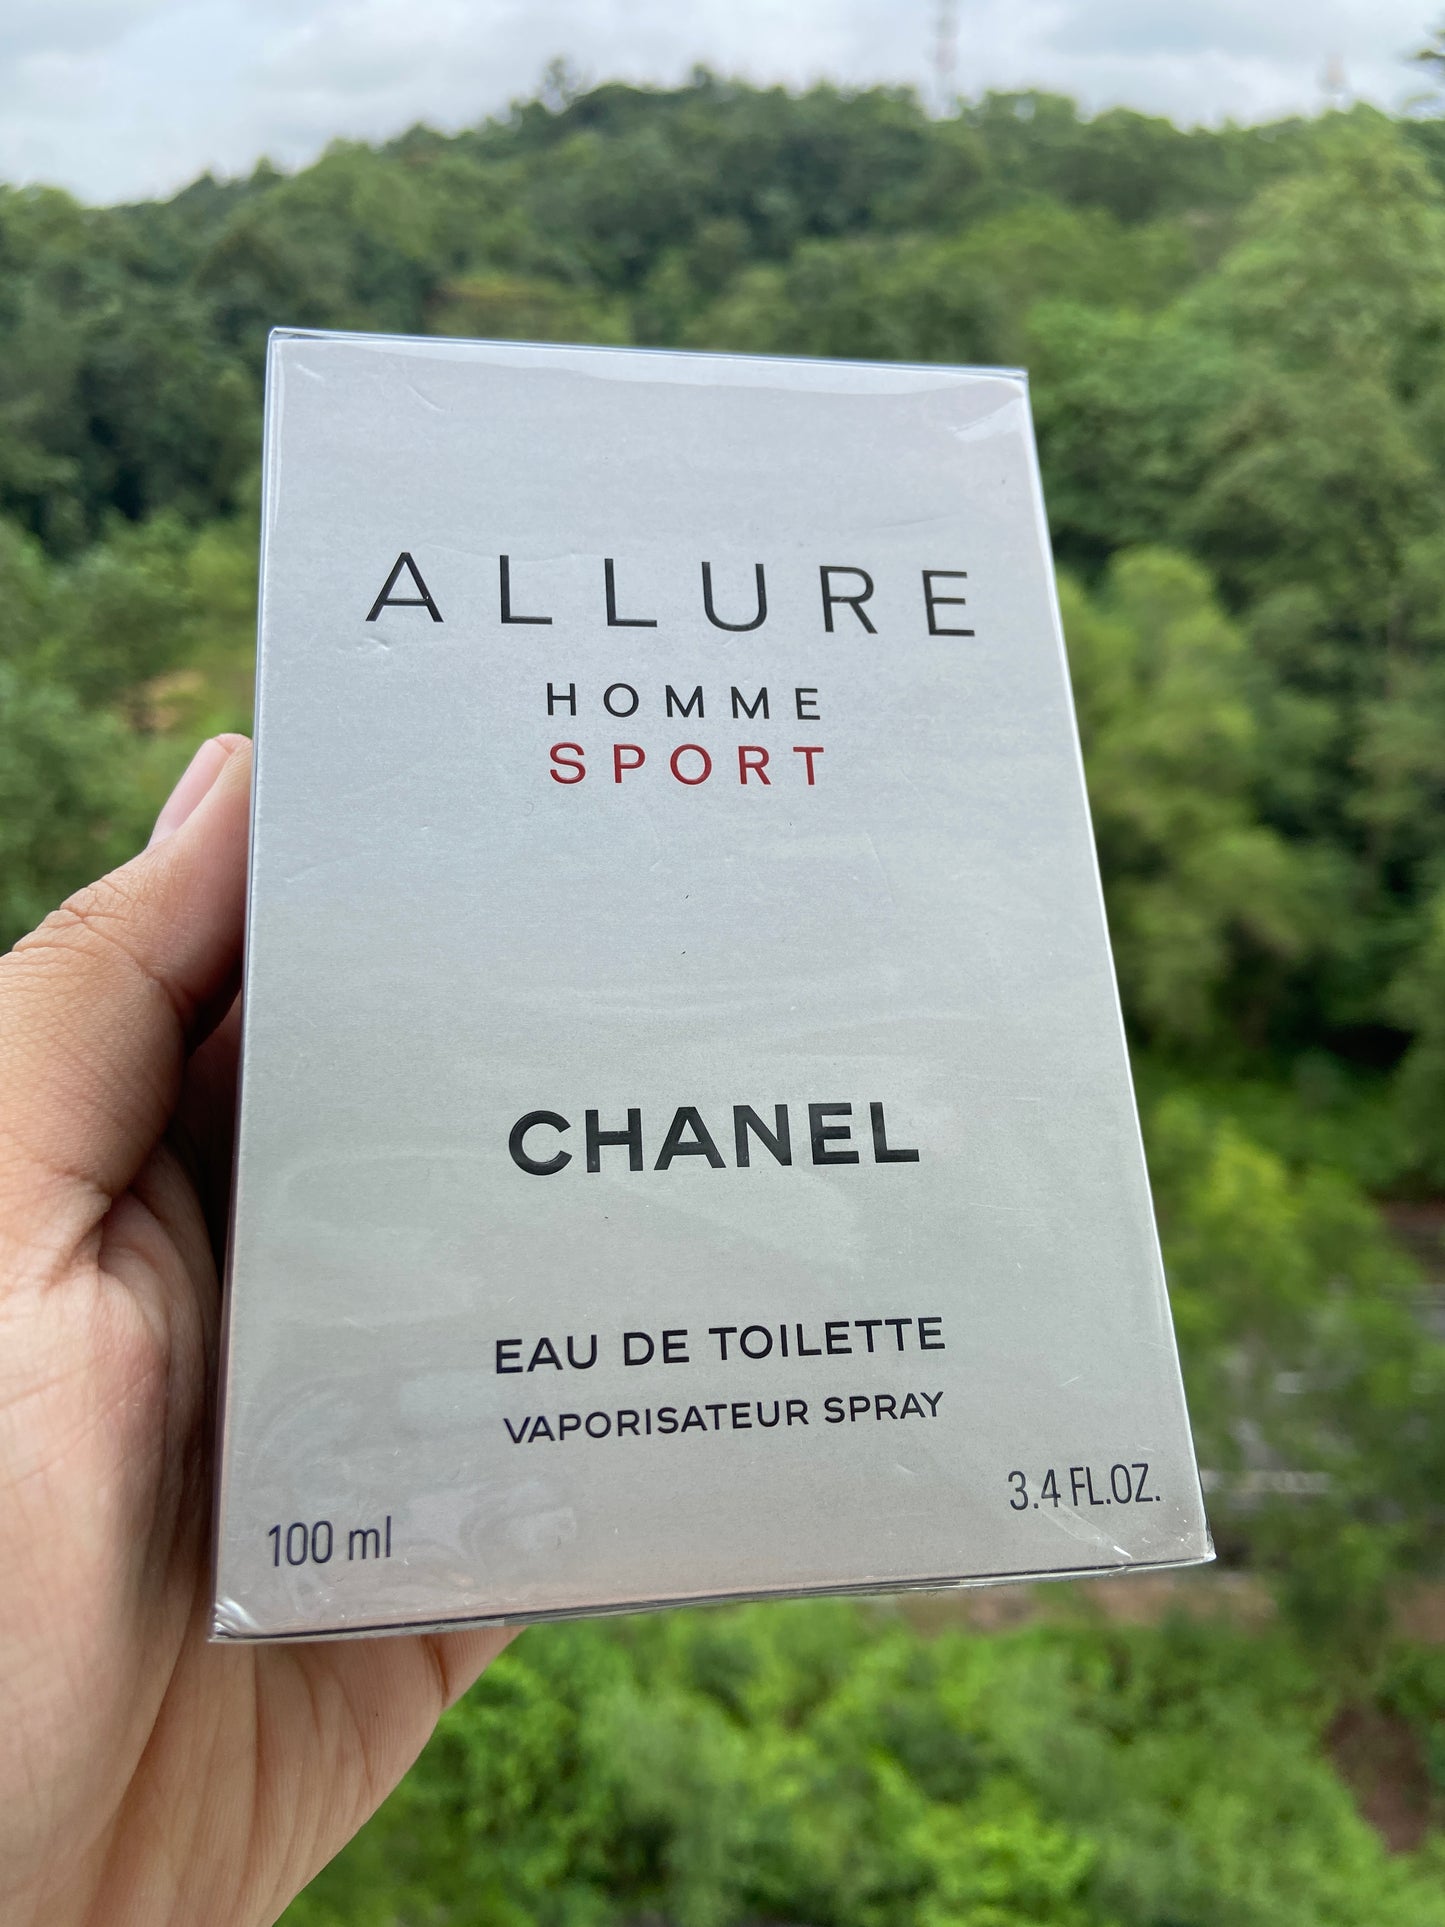 Chanel Allure Homme Sport - Eau de toilette extrême - 100 ml - INCI Beauty